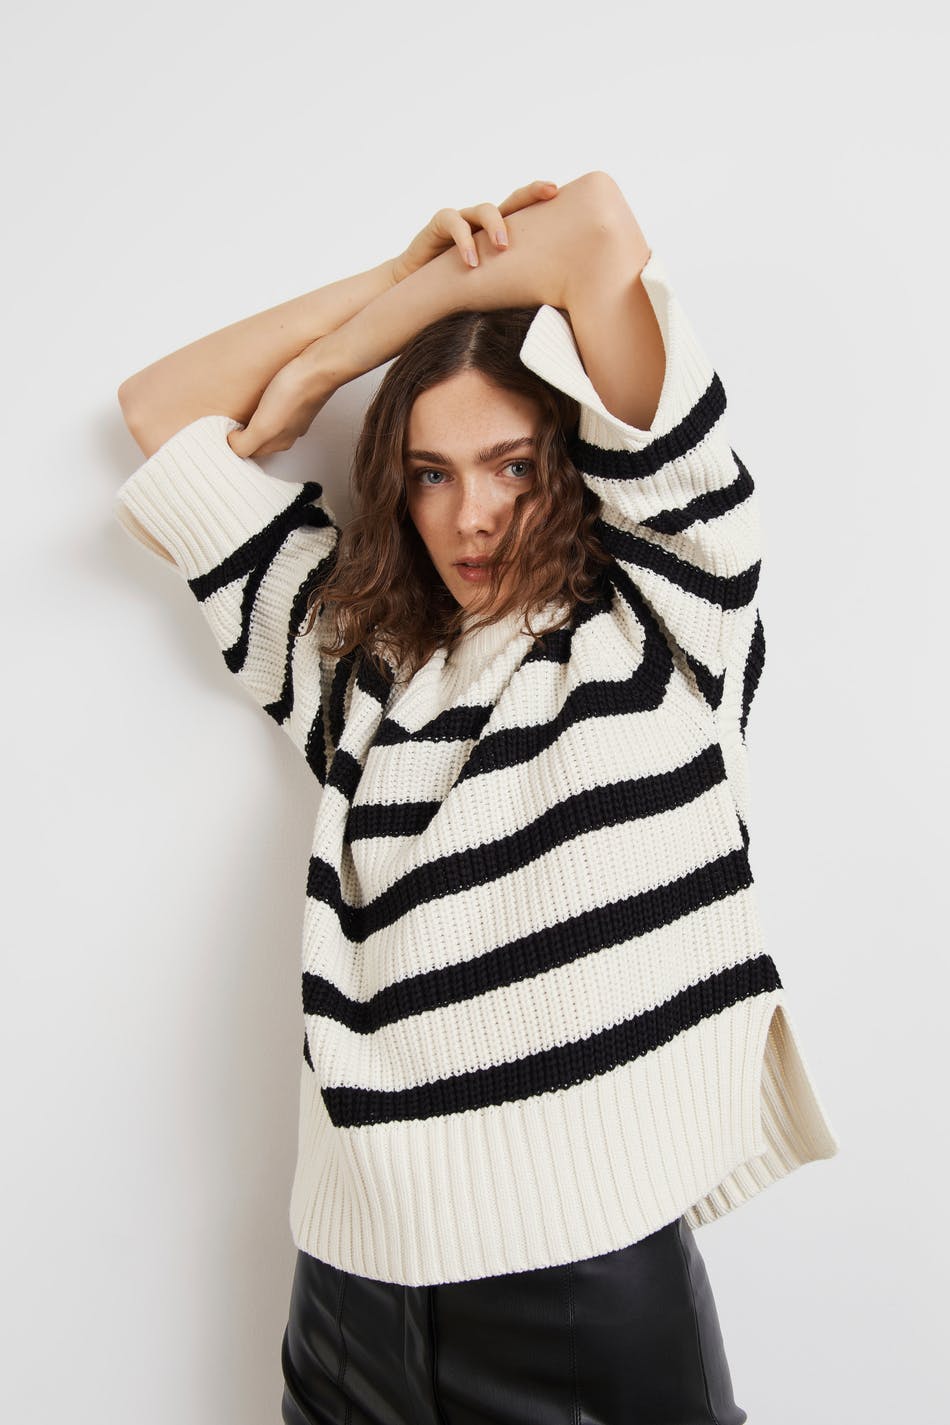 se tv Overskæg Symptomer Alba knitted sweater - Gina Tricot